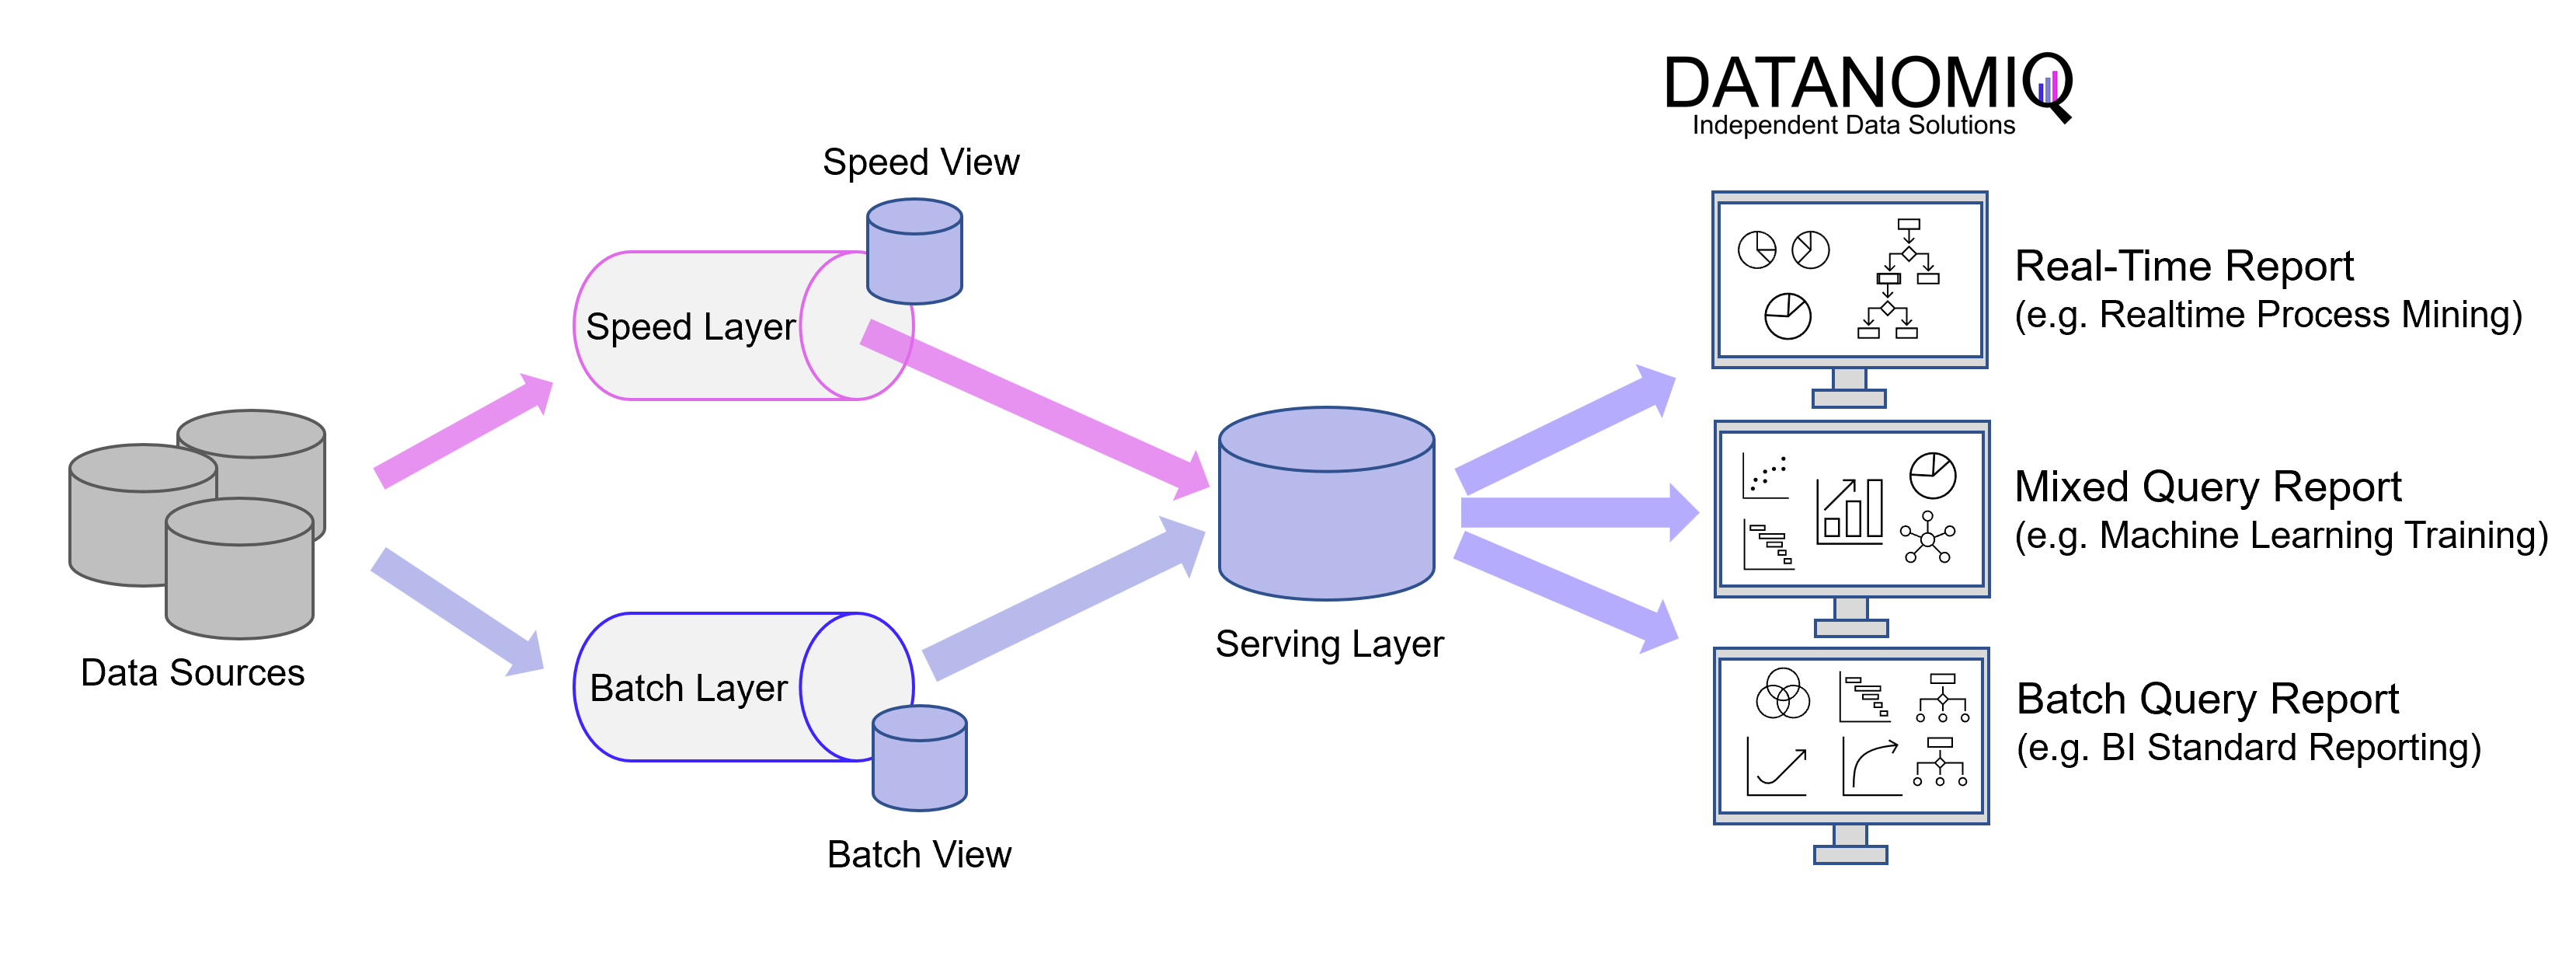 Lambda Architecture for Data Lakehousing by DATANOMIQ 